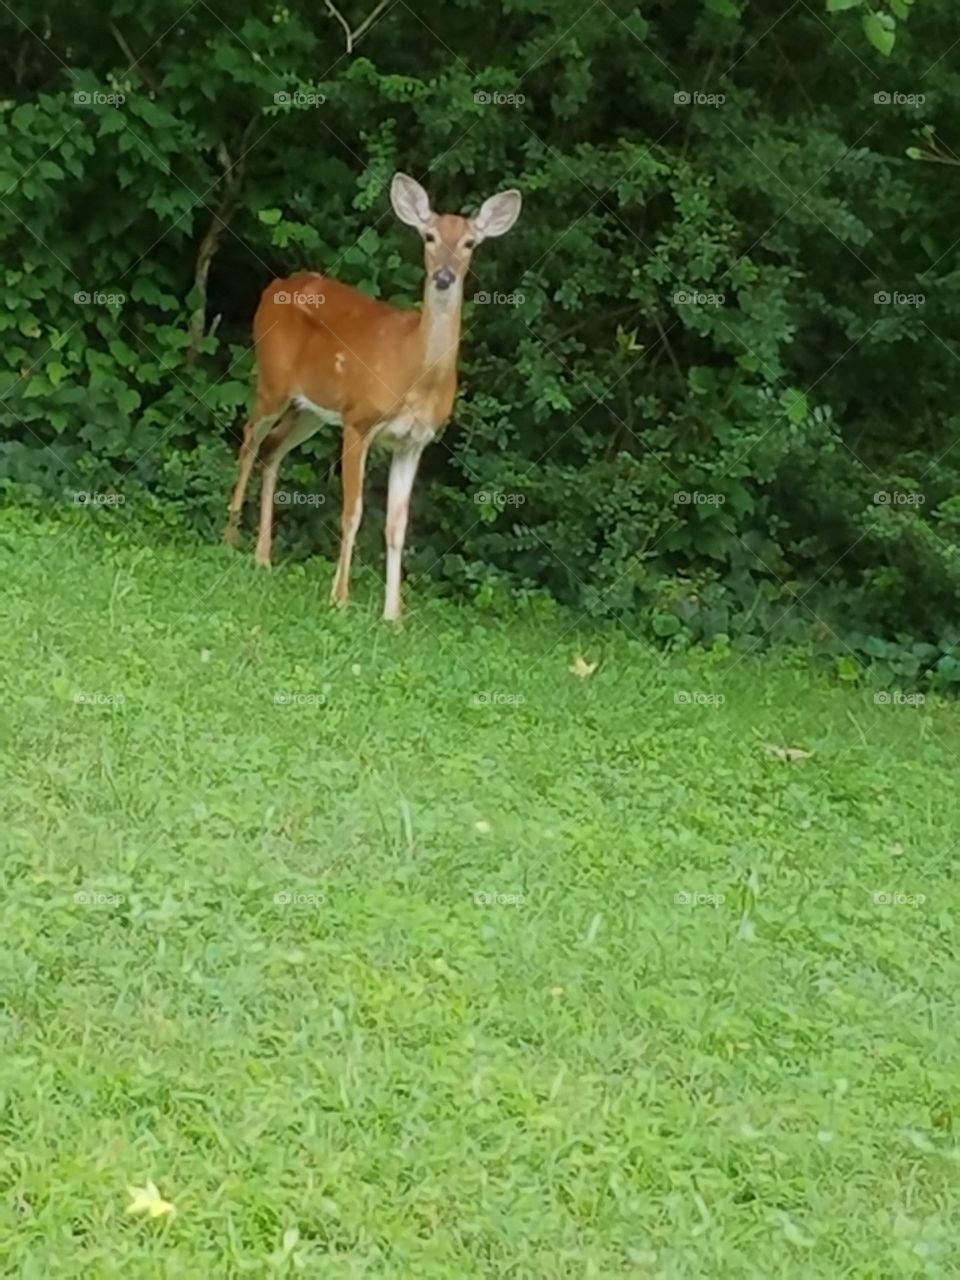 Deer in my backyard!